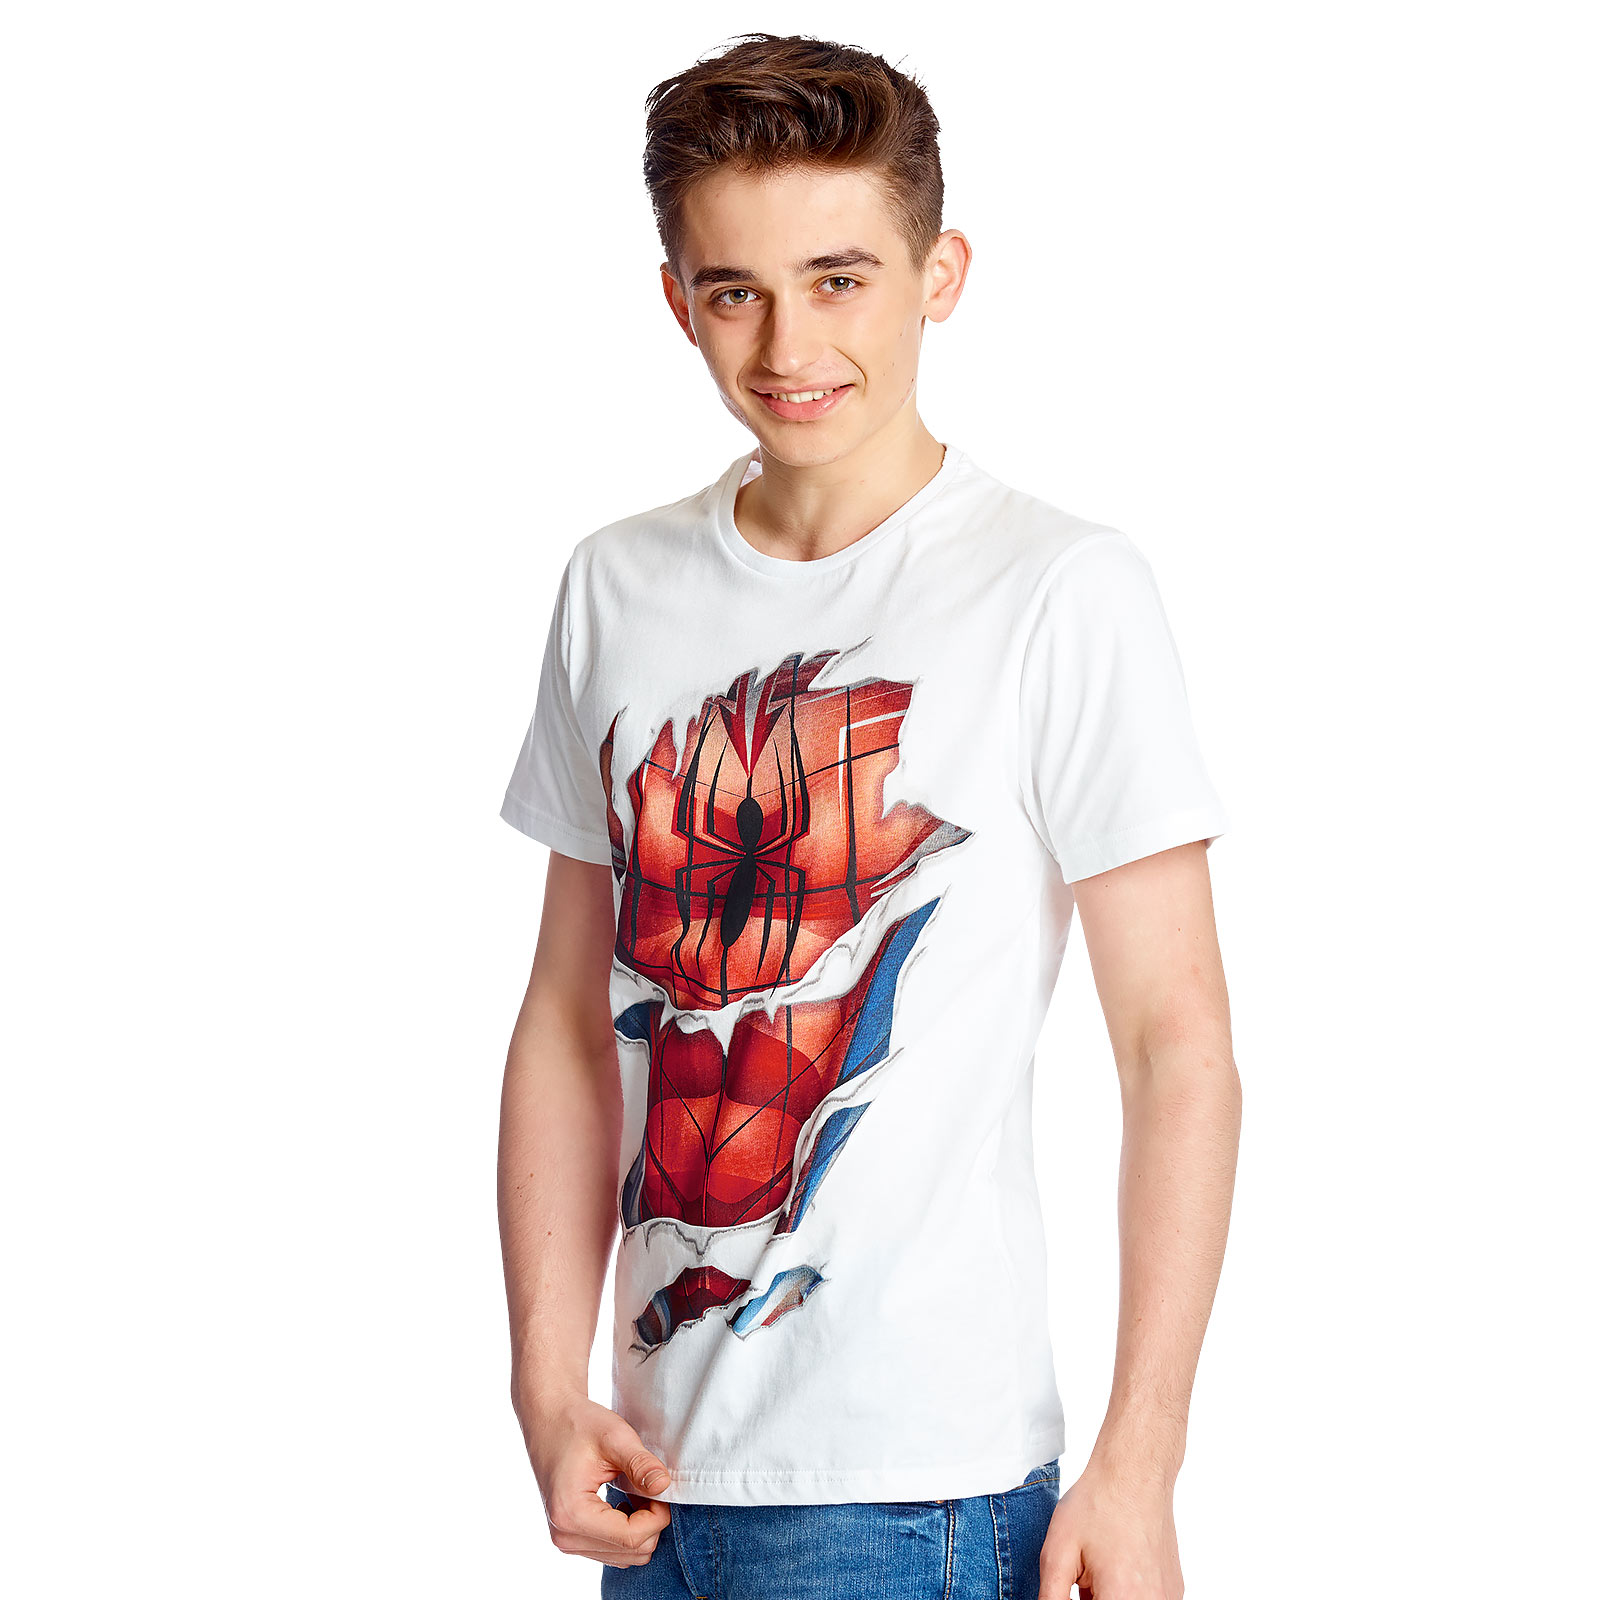 Spider-Man - T-shirt costume blanc